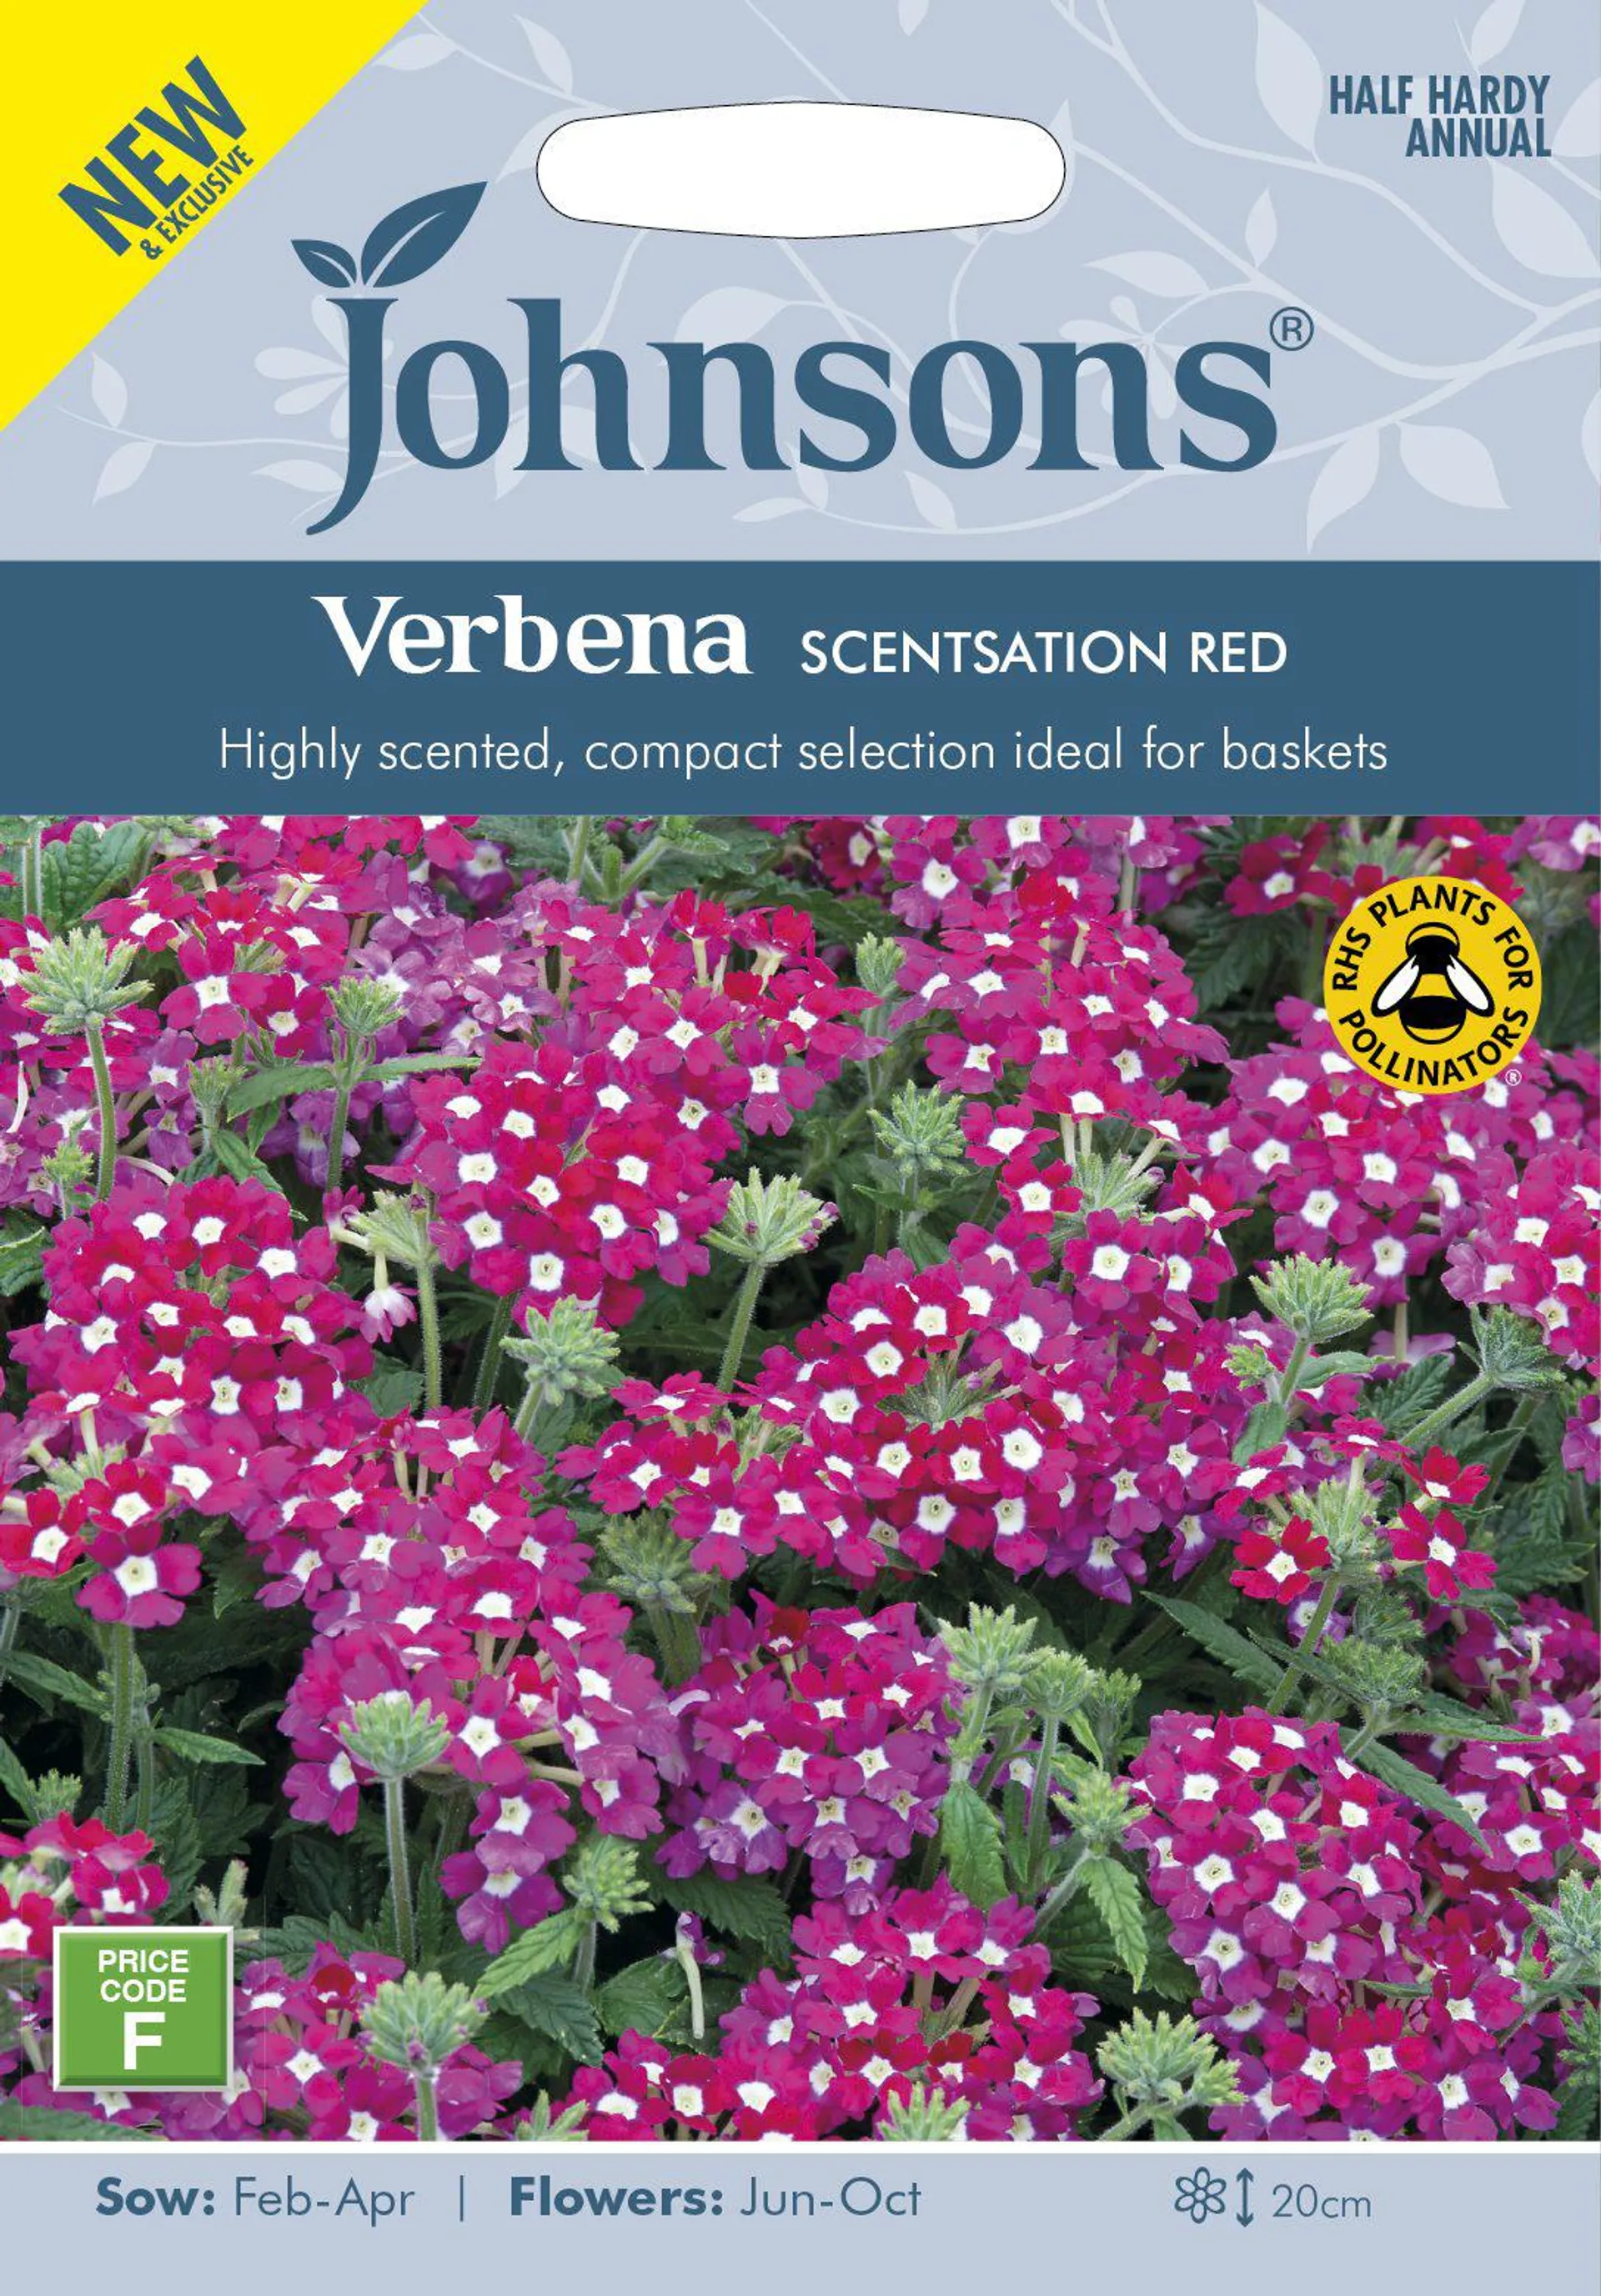 Johnsons Verbena Scentsation Red Seeds